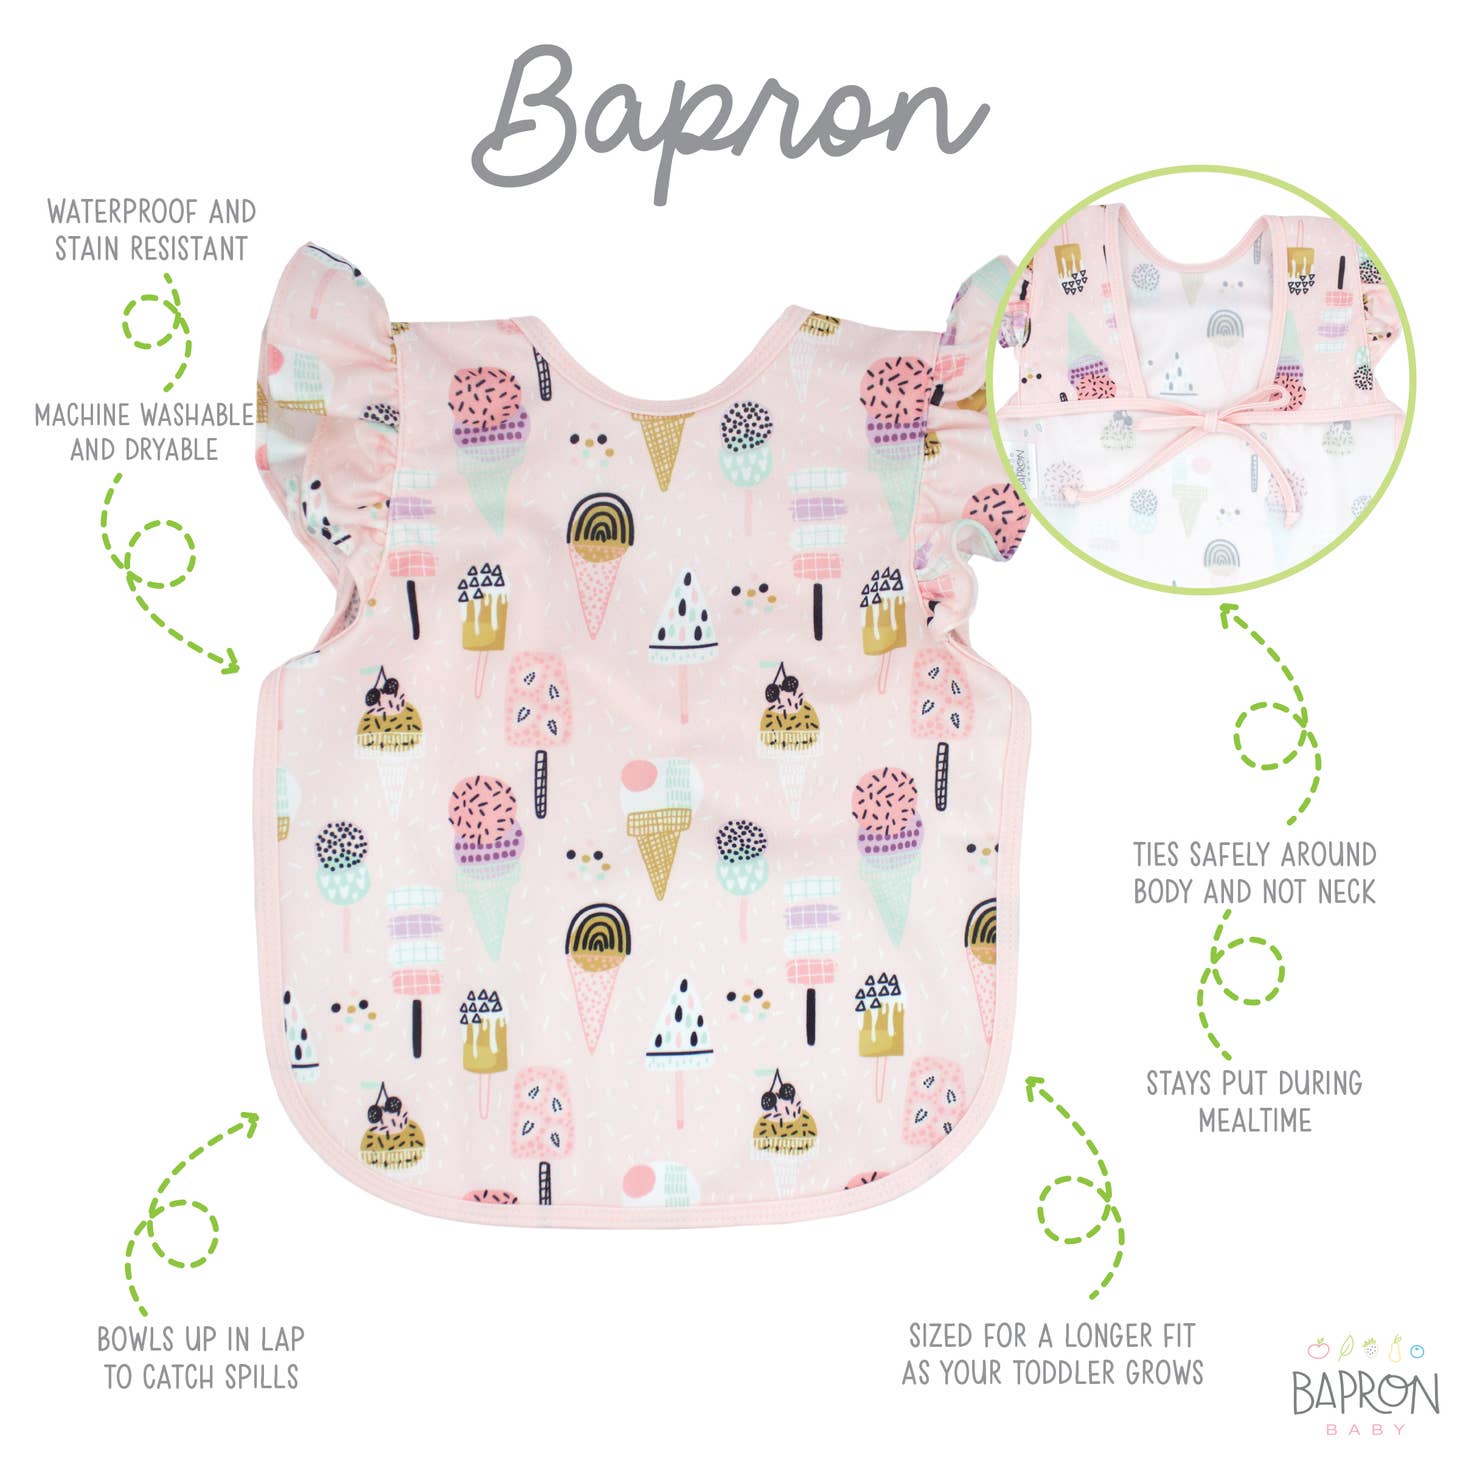 Bapron - The Original Bib + Apron - Toddler (6m - 3T)